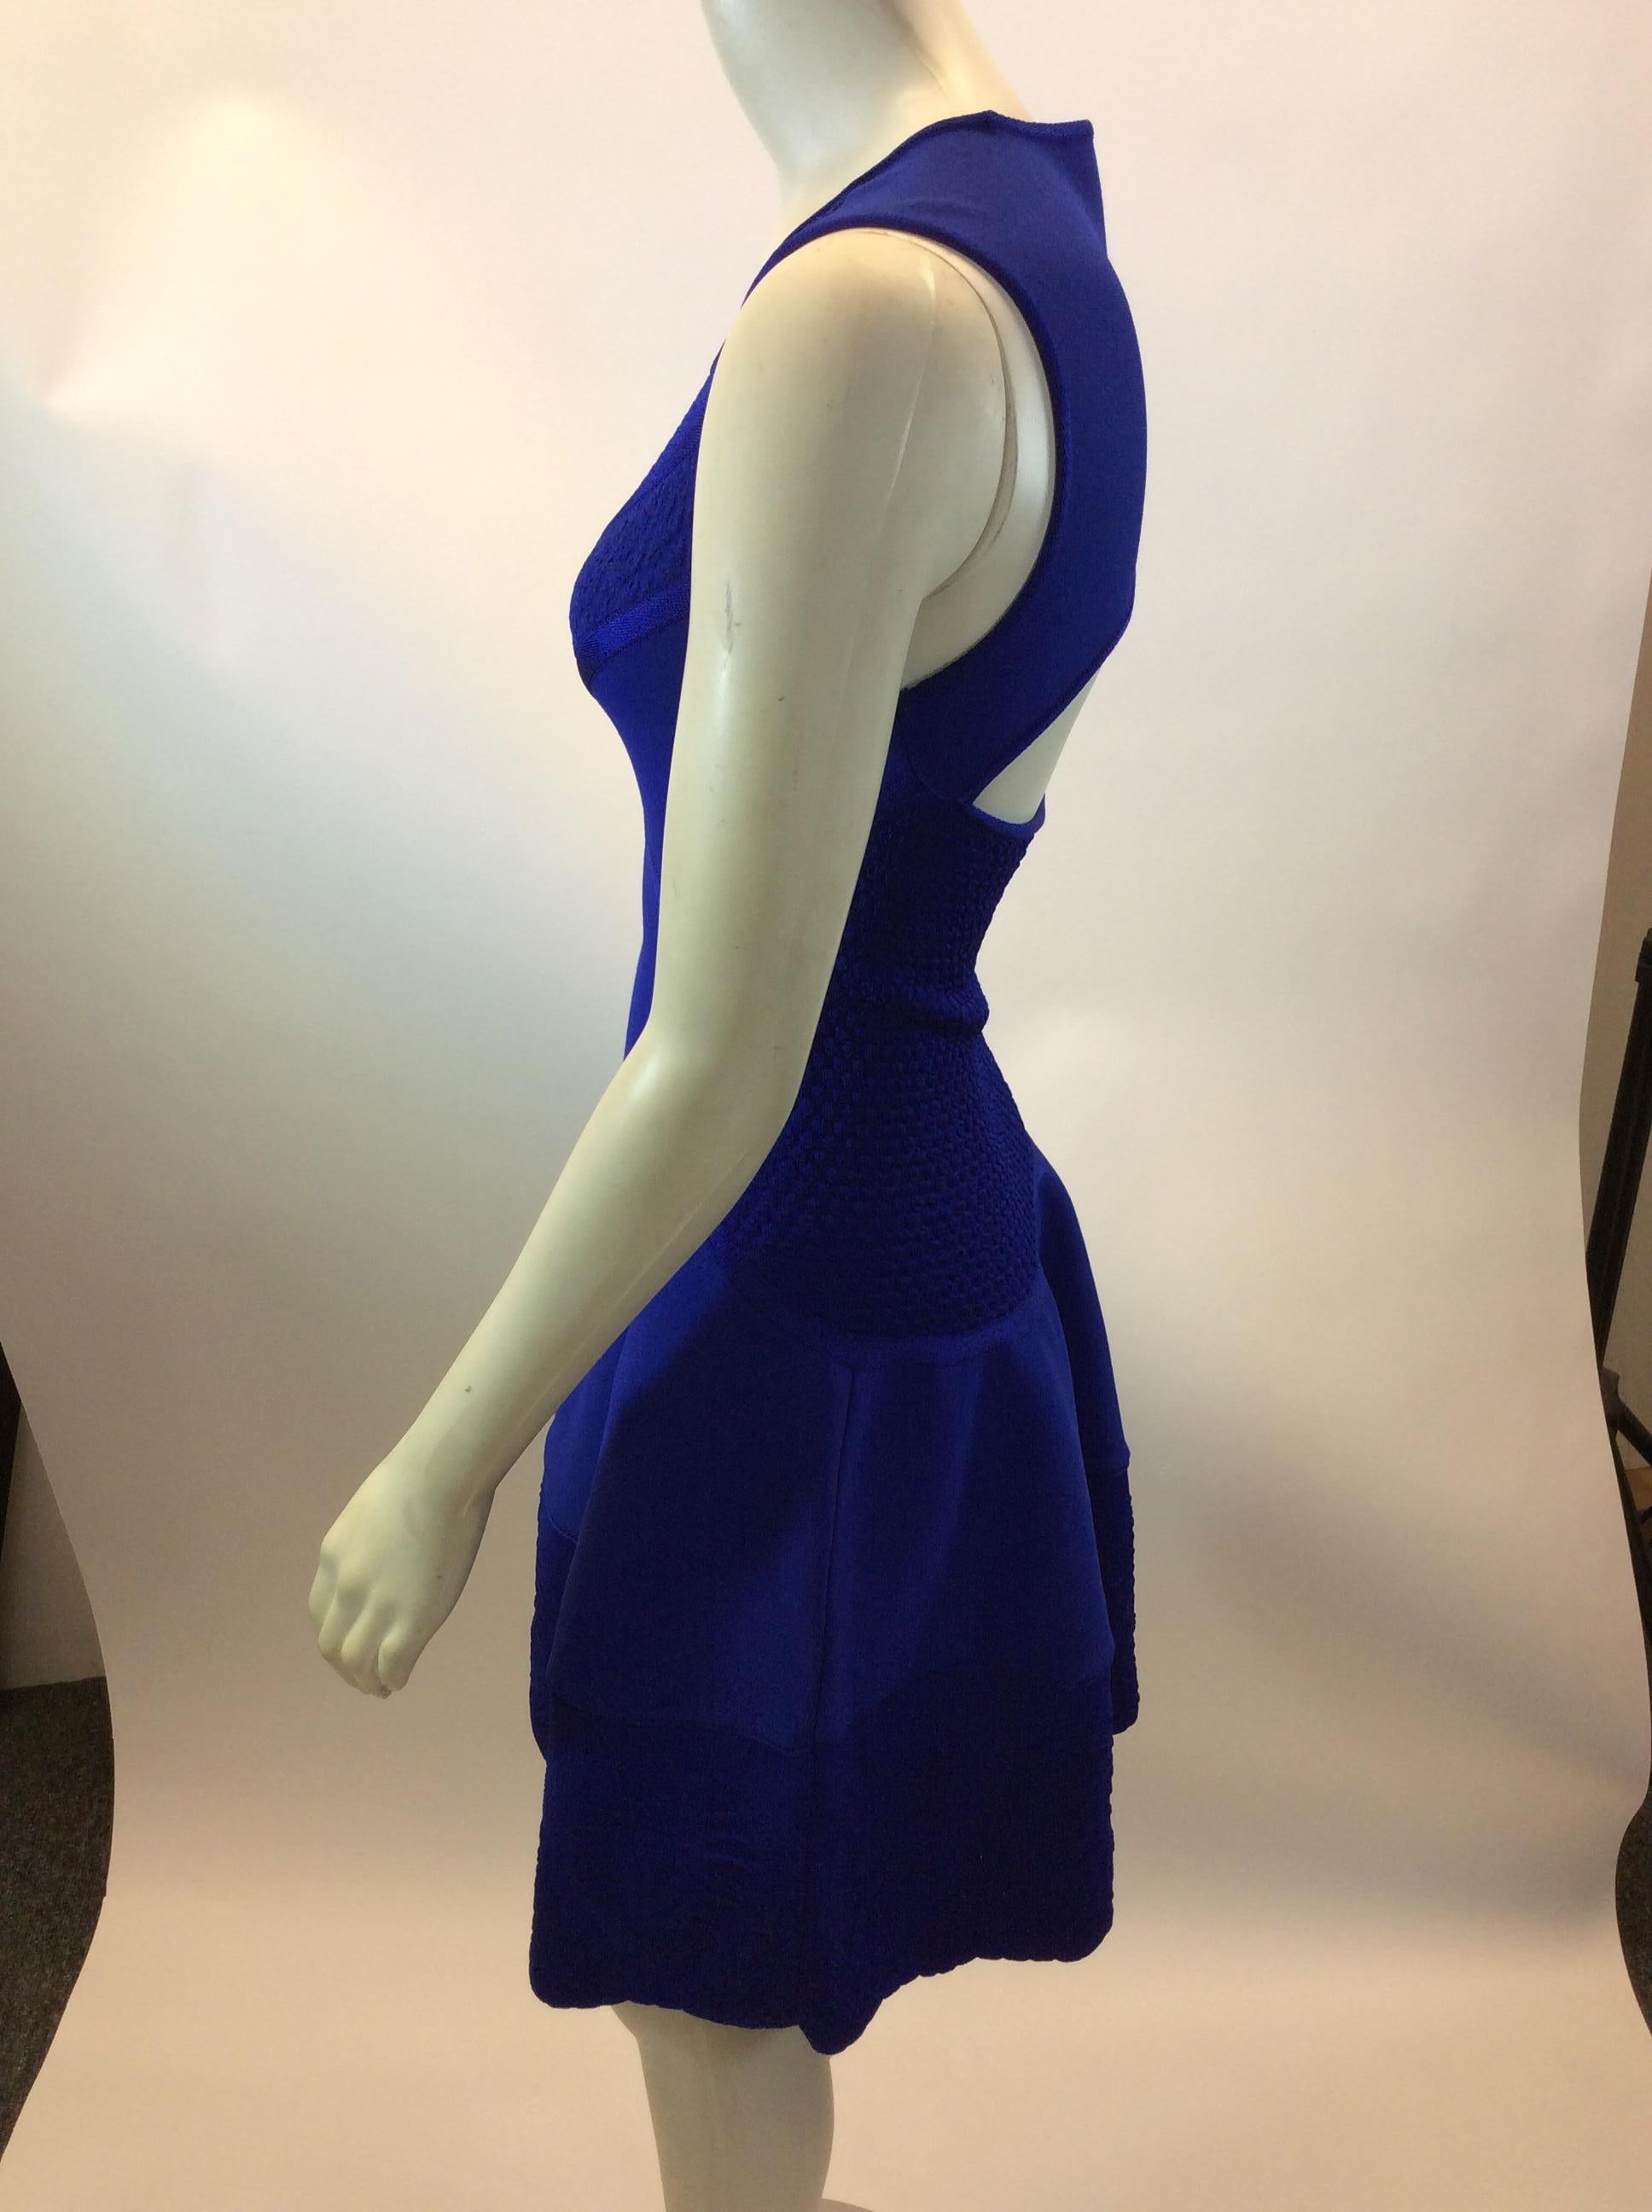 Roberto Cavalli Royal Blue Sleeveless Dress
$450
Made in Italy
65% Viscose, 27% Nylon, 5% Polyester, 3% Elastane
Size 38
Length 35.5